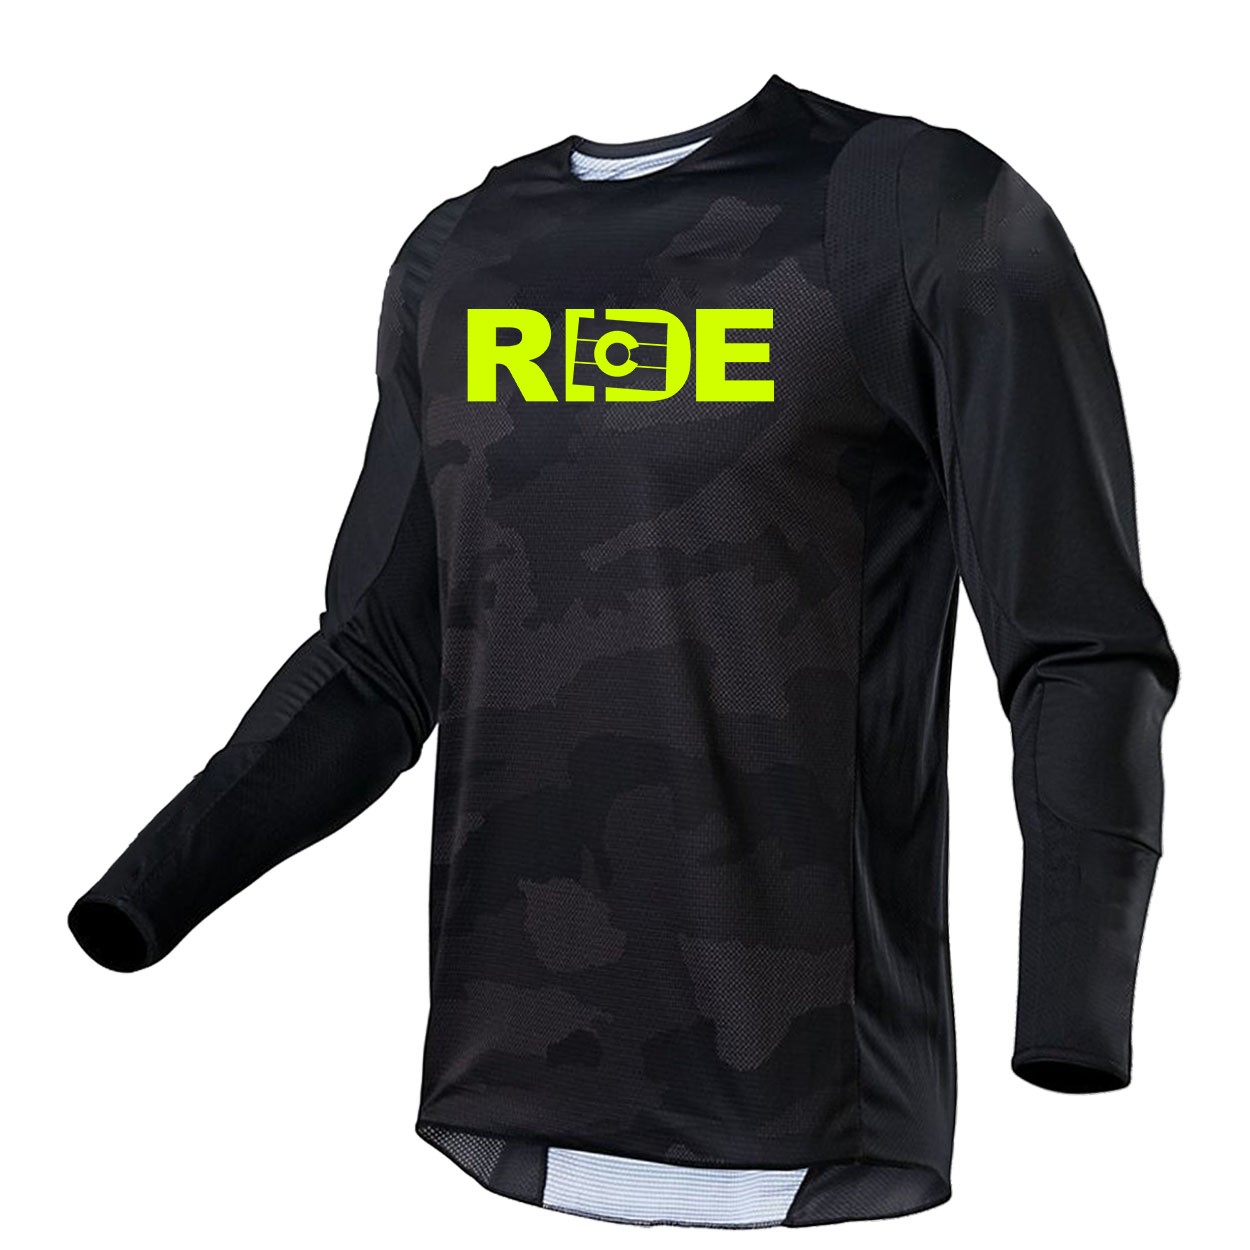 Ride Colorado Classic Performance Jersey Long Sleeve Shirt Black Camo (Hi-Vis Logo)